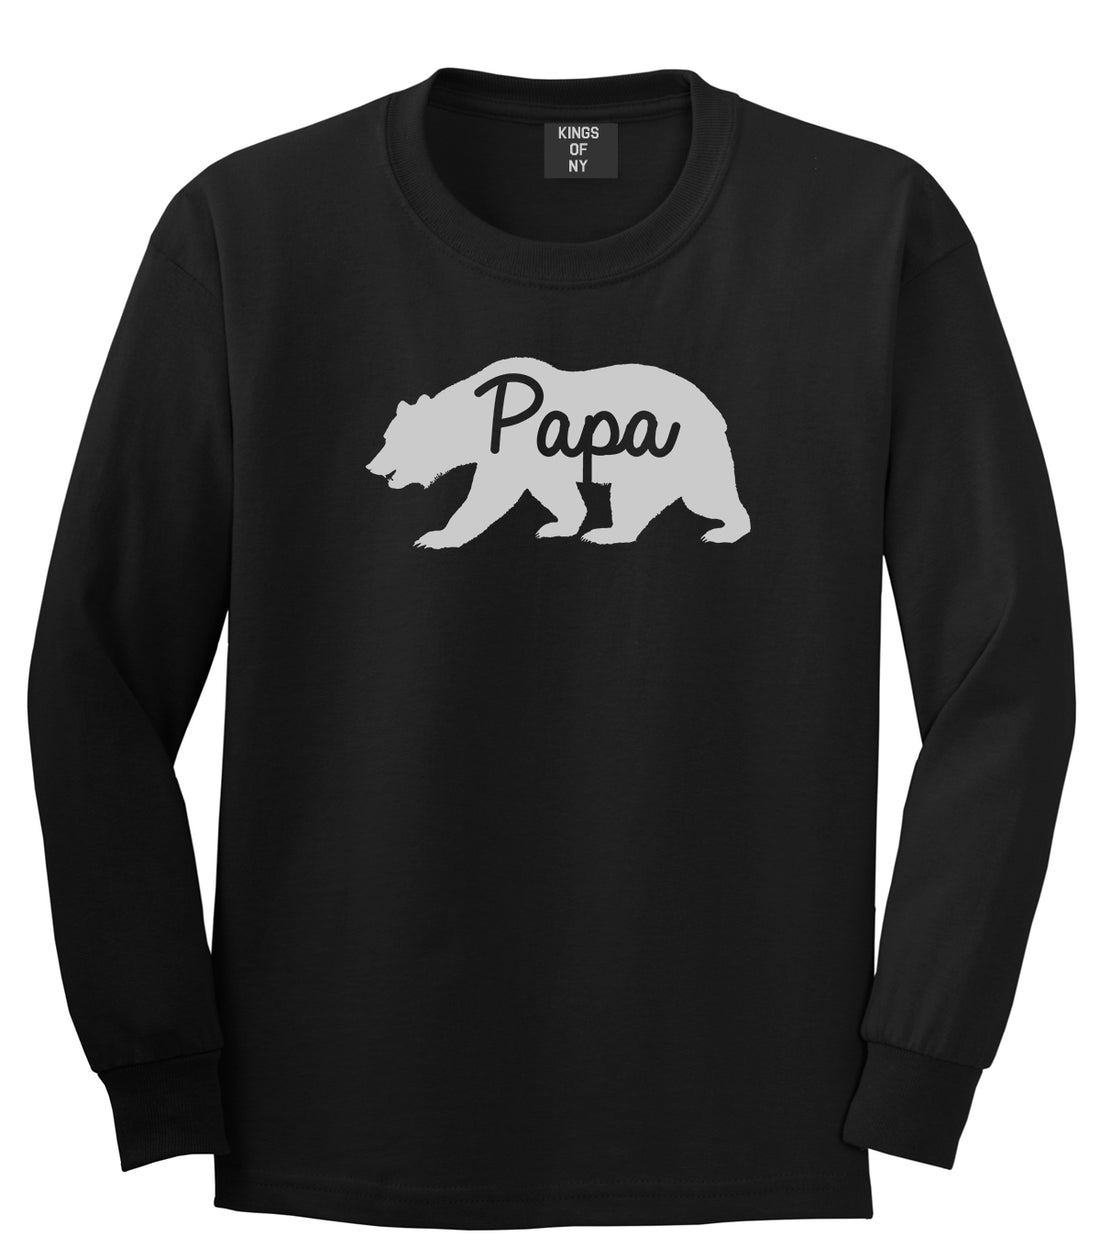 Papa Bear Mens Long Sleeve T-Shirt Black by Kings Of NY